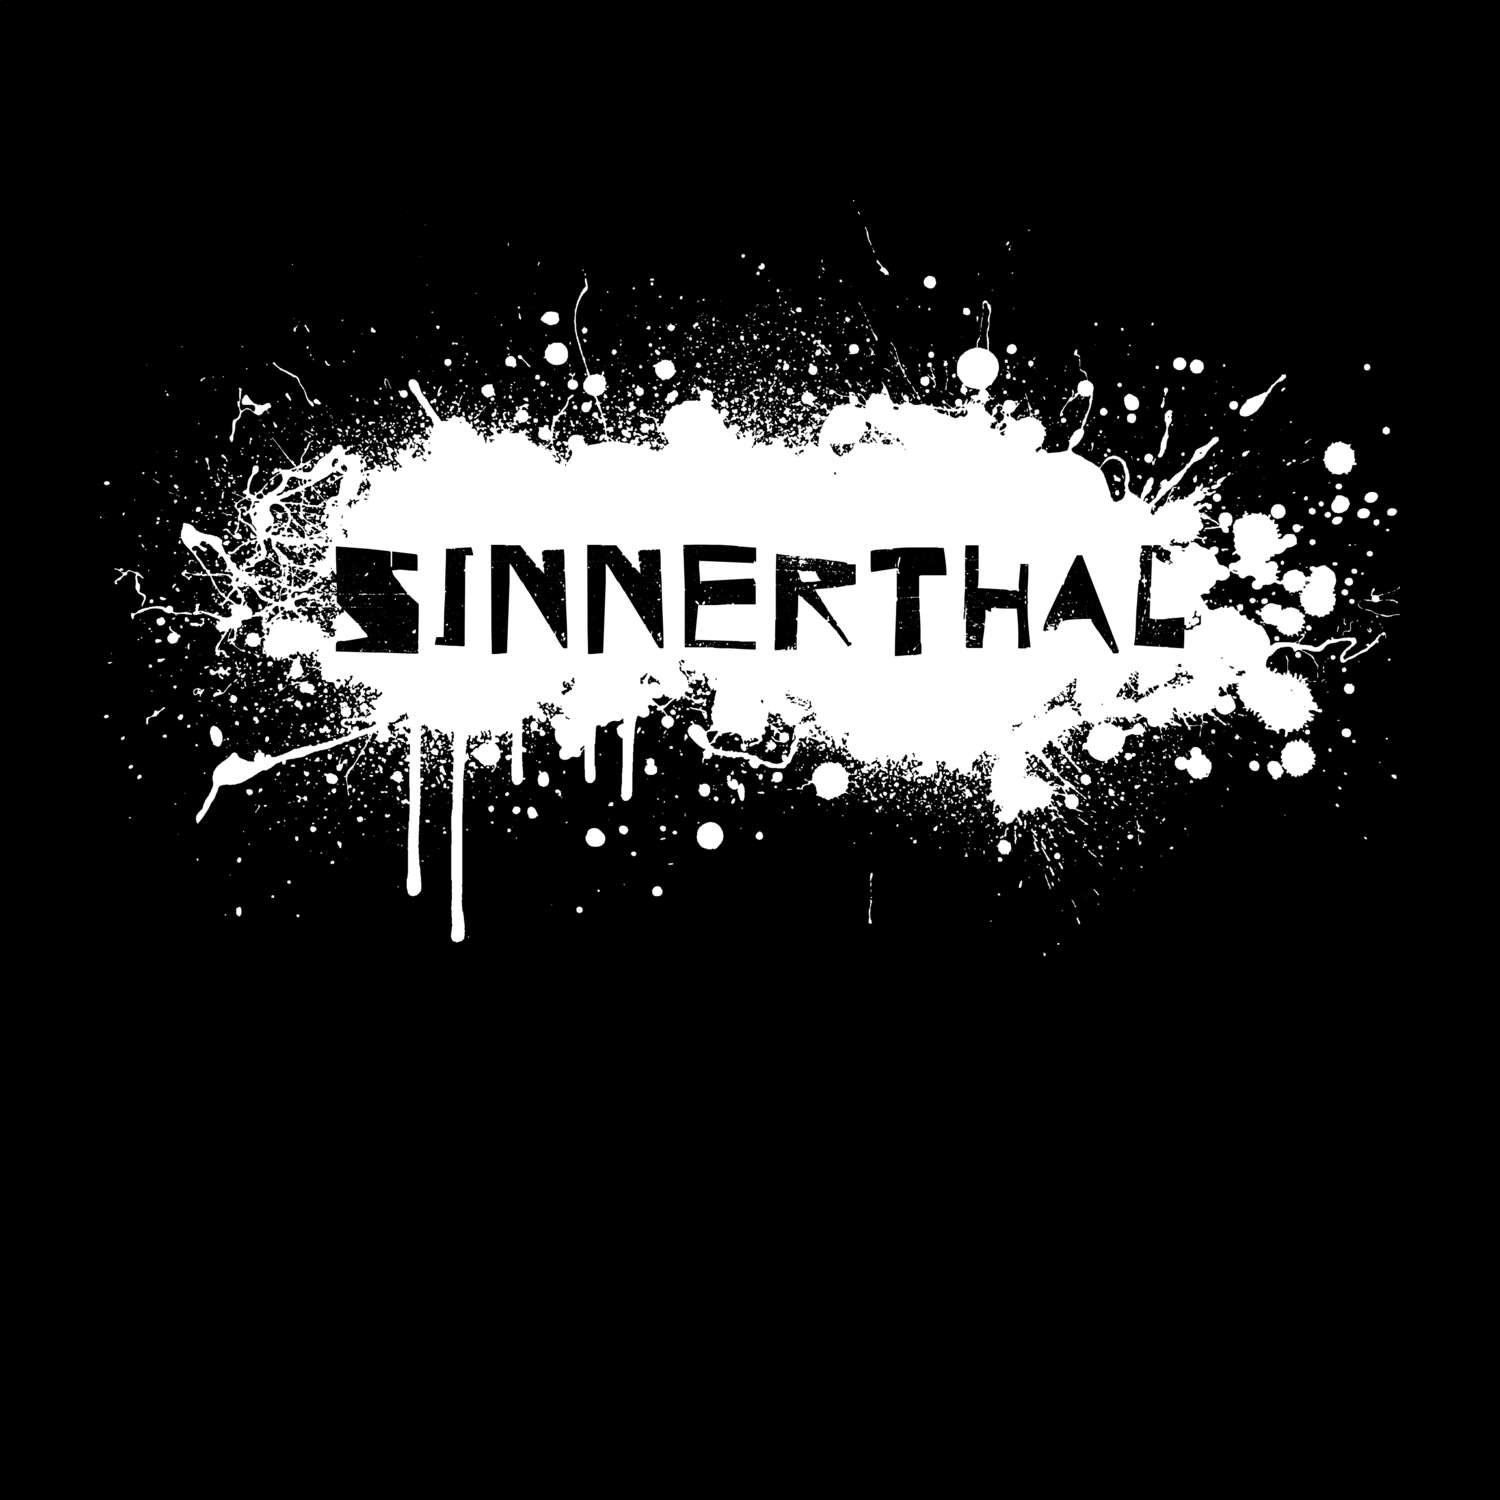 Sinnerthal T-Shirt »Paint Splash Punk«